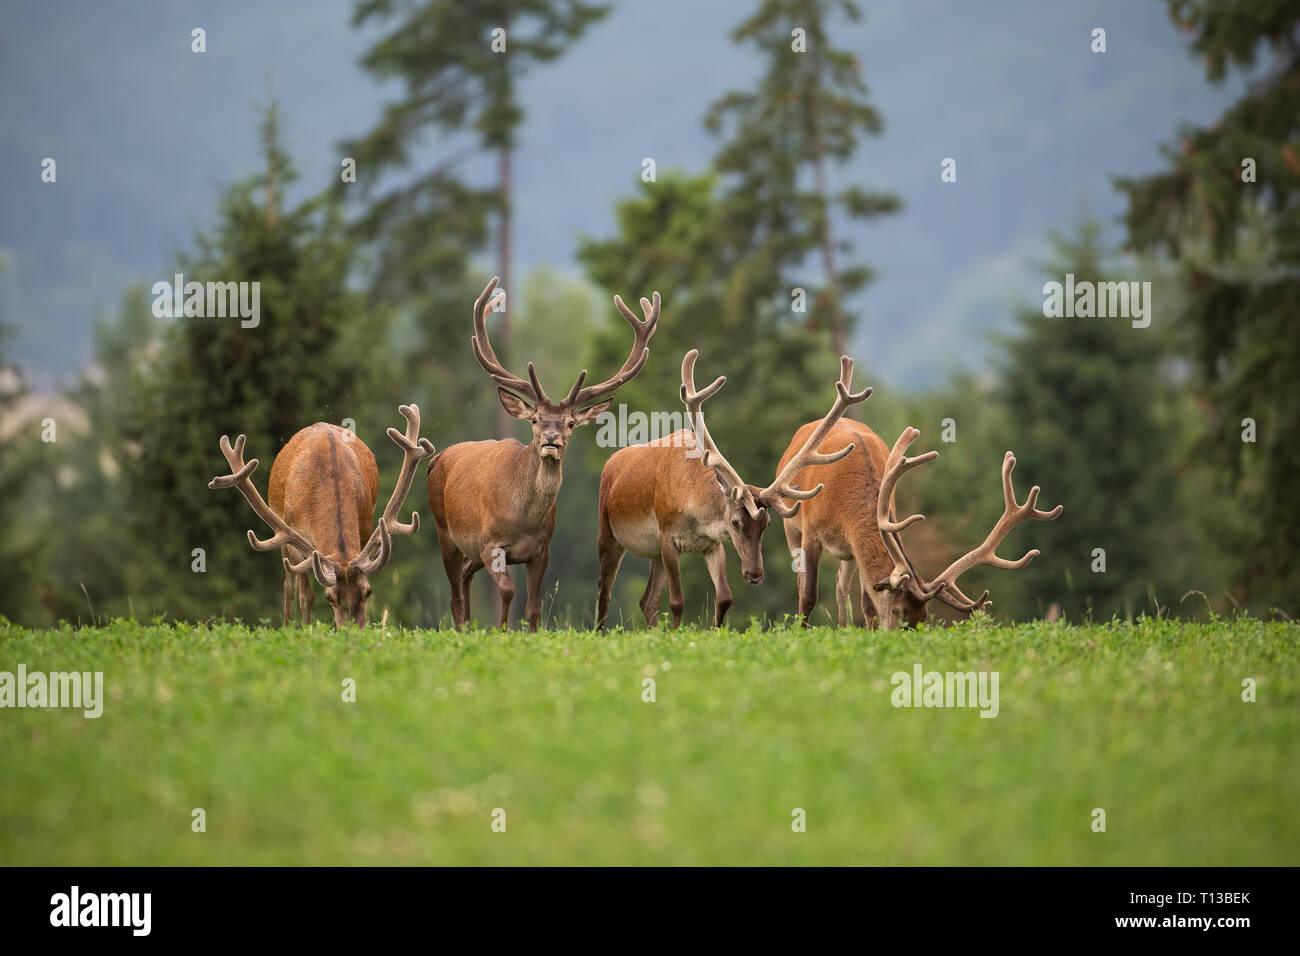 Herd of red deer stags with antlers in velvet. Stock Photo